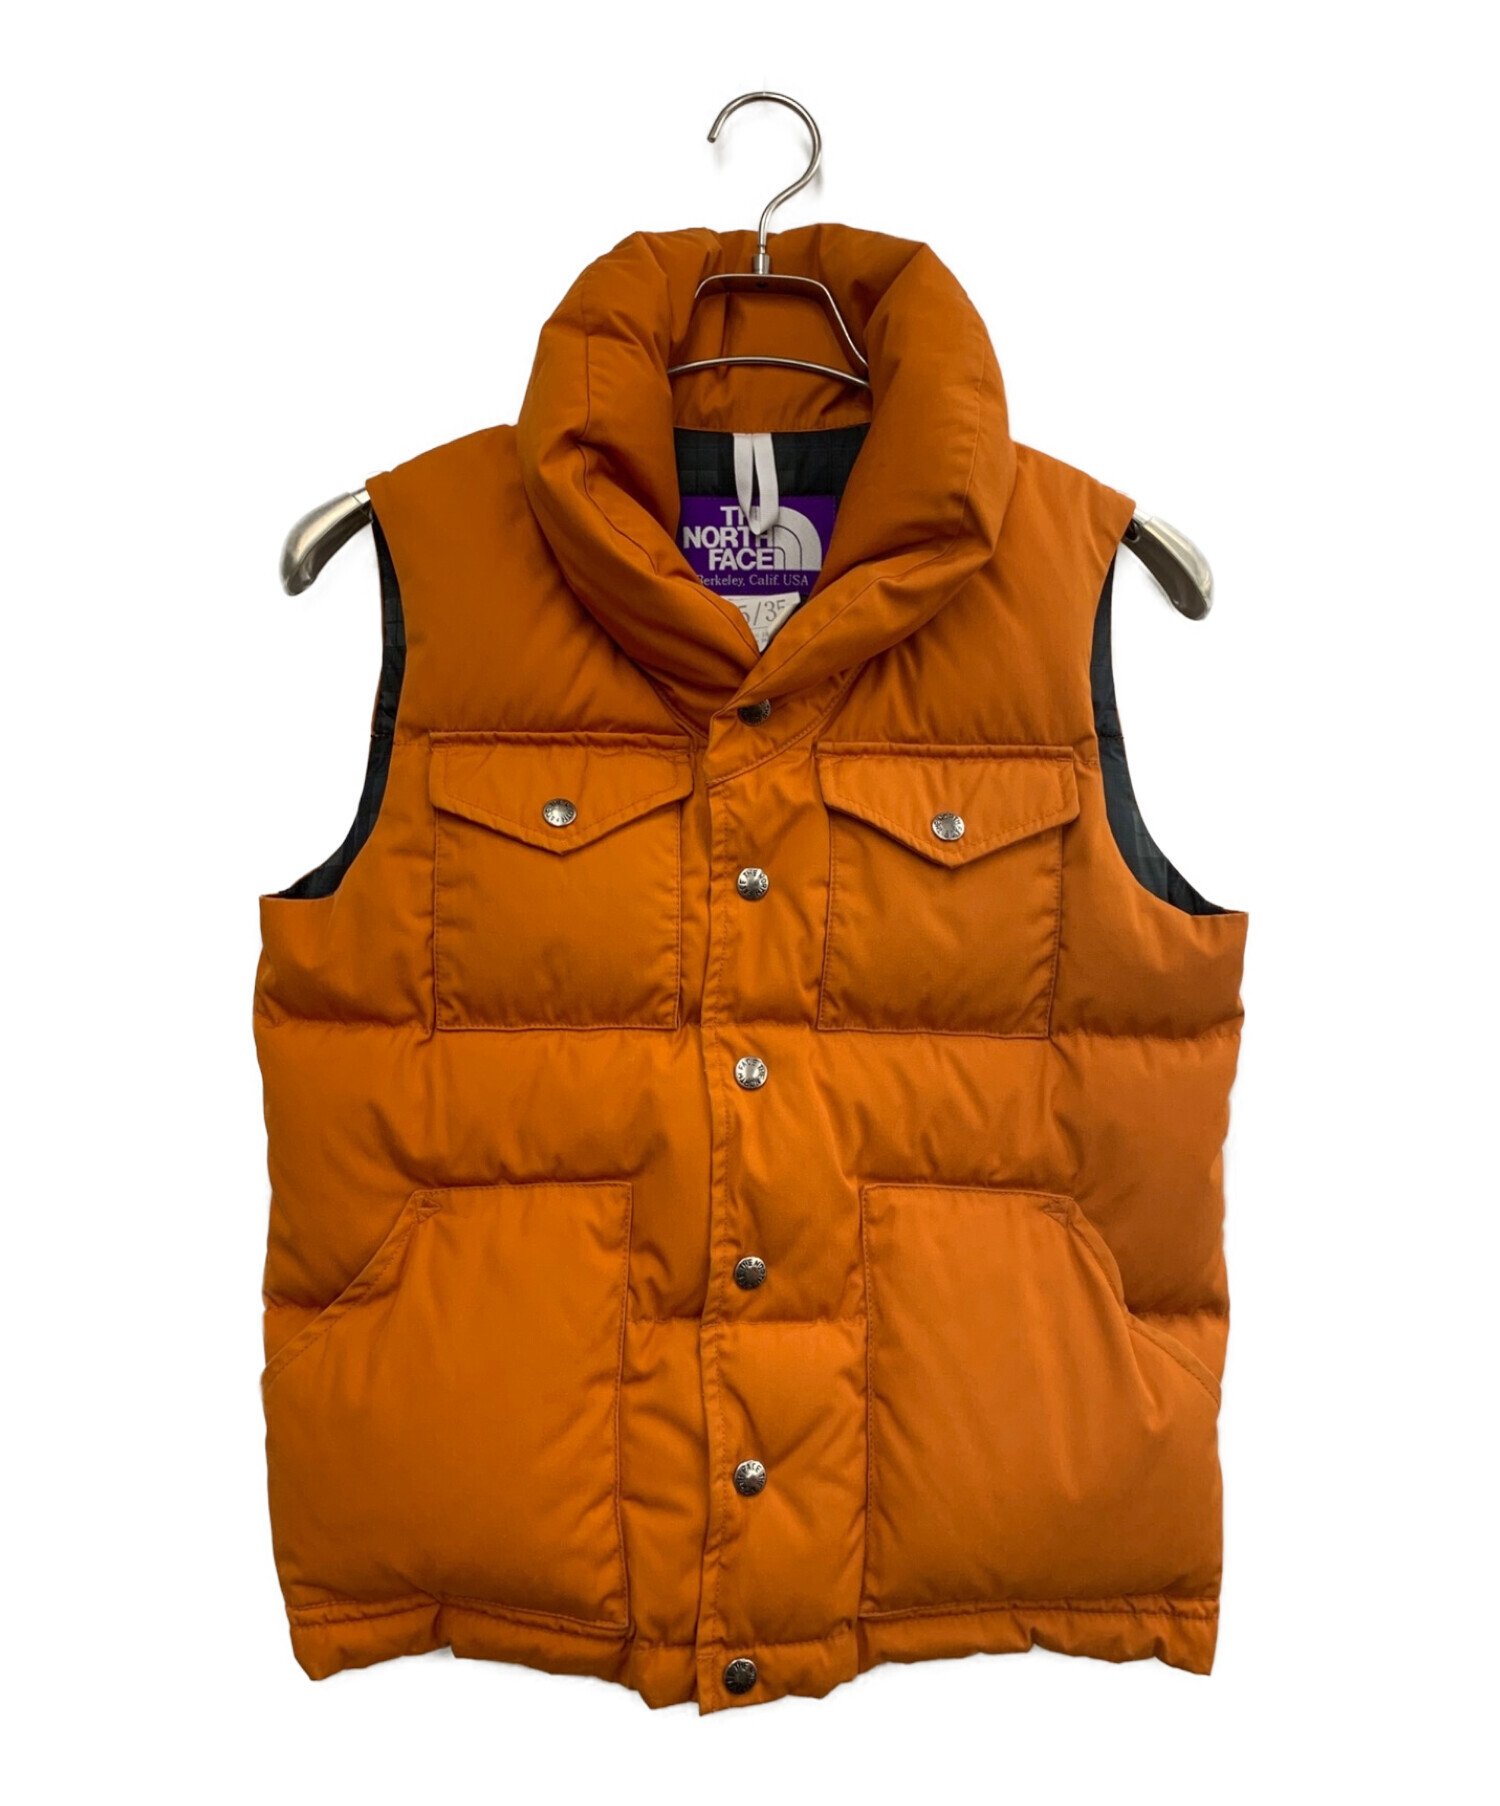 northface purple label vest